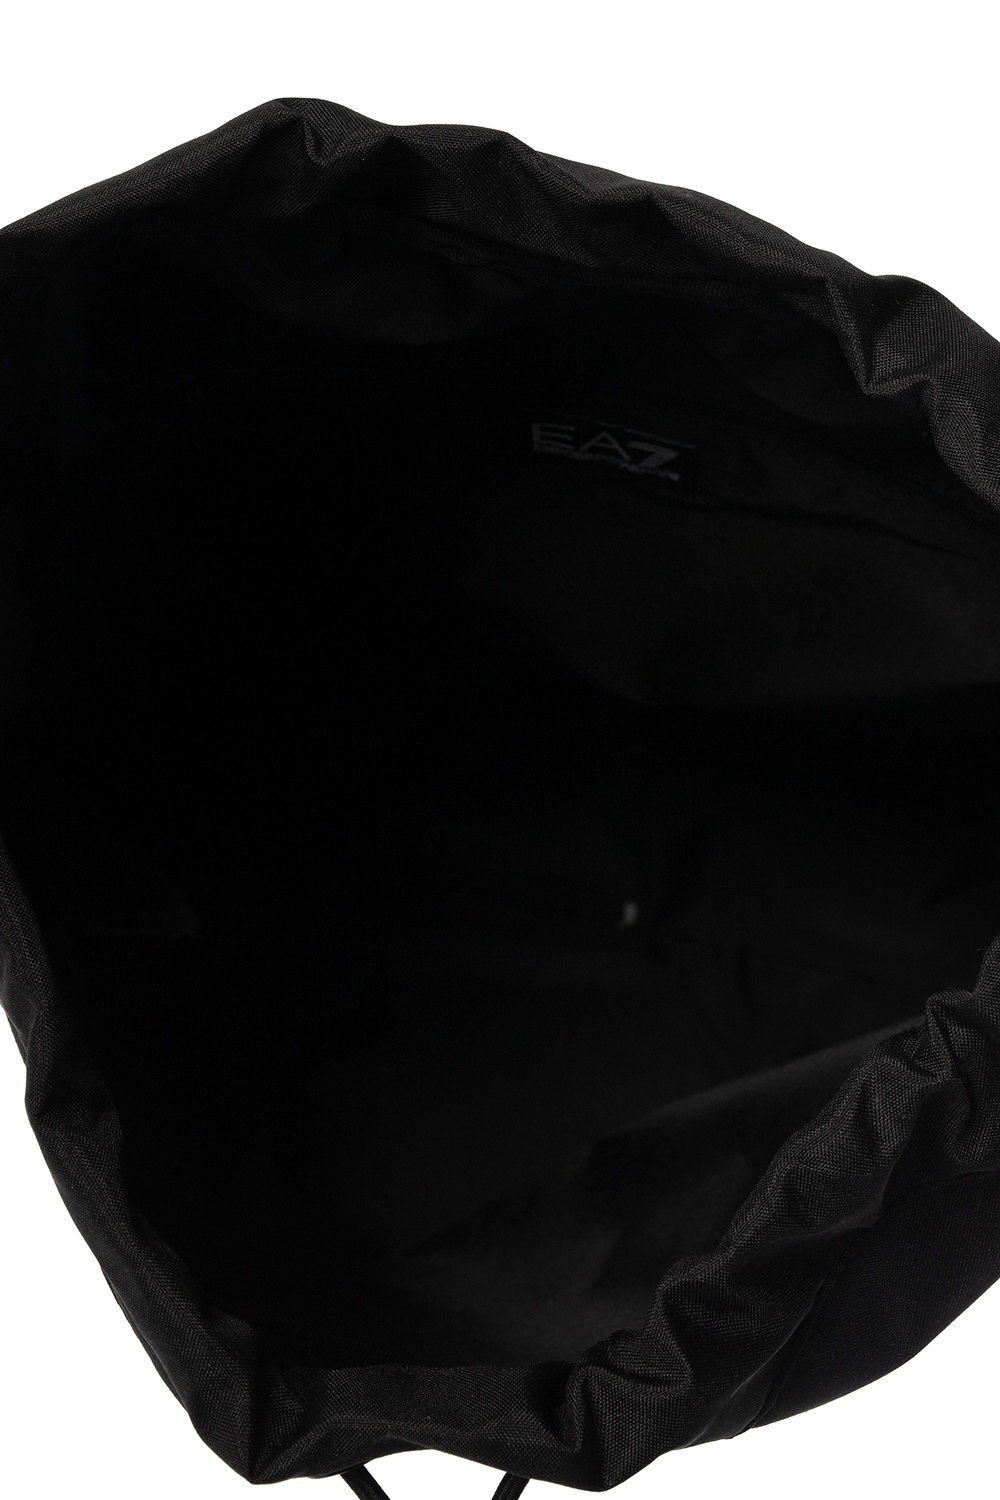 EA7 Emporio armani Kids Backpack with logo